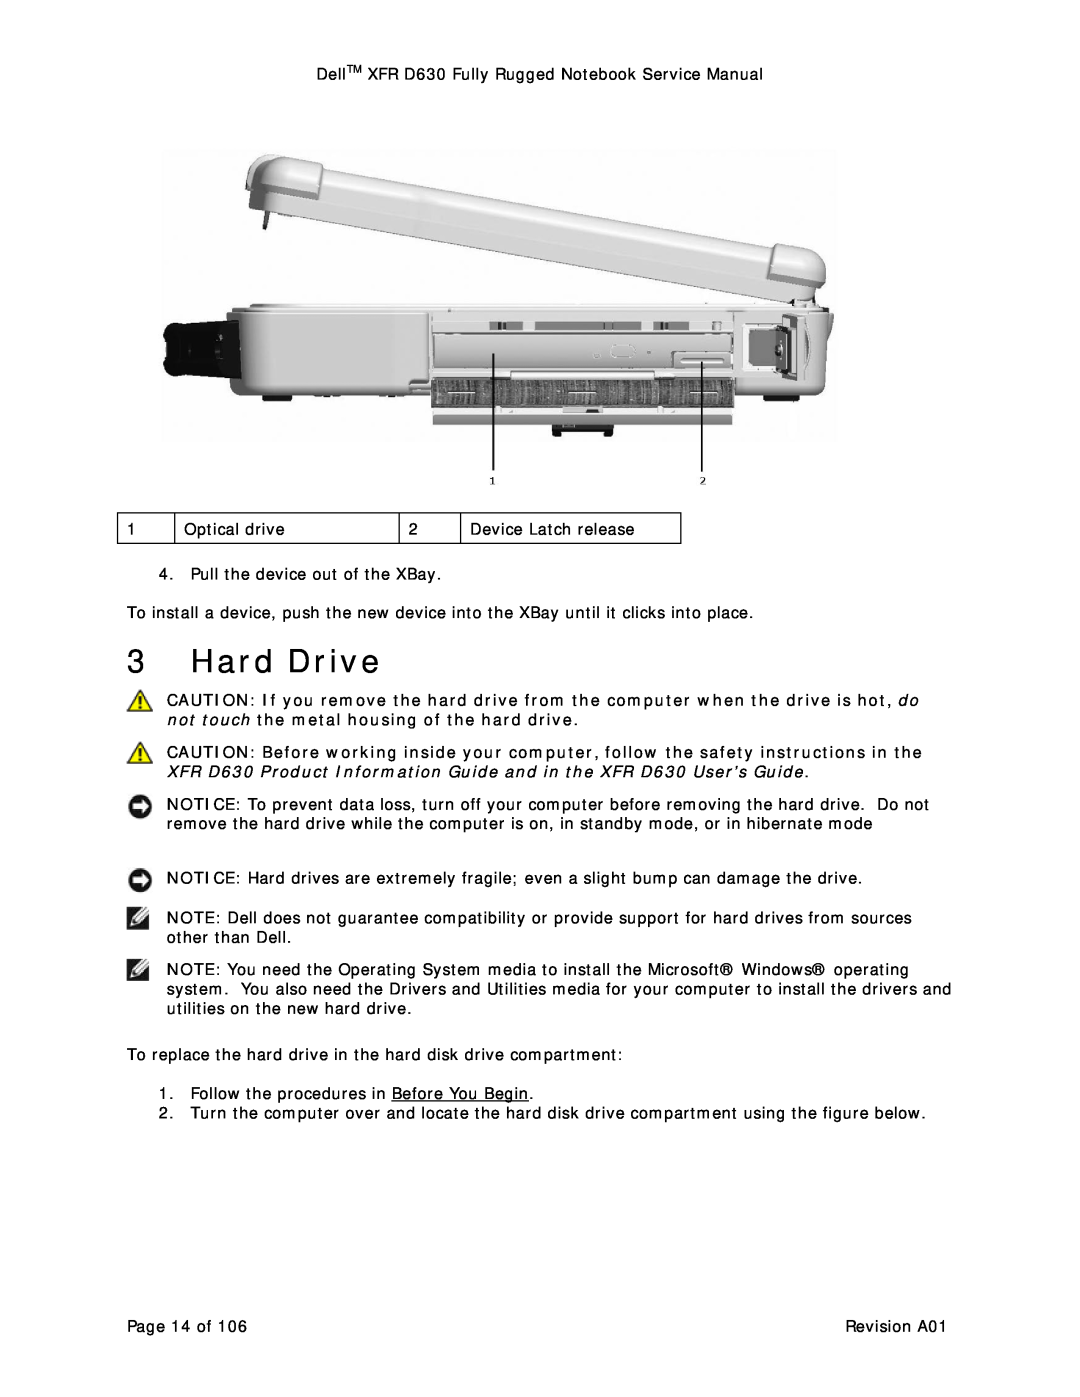 Dell D630 service manual Hard Drive 